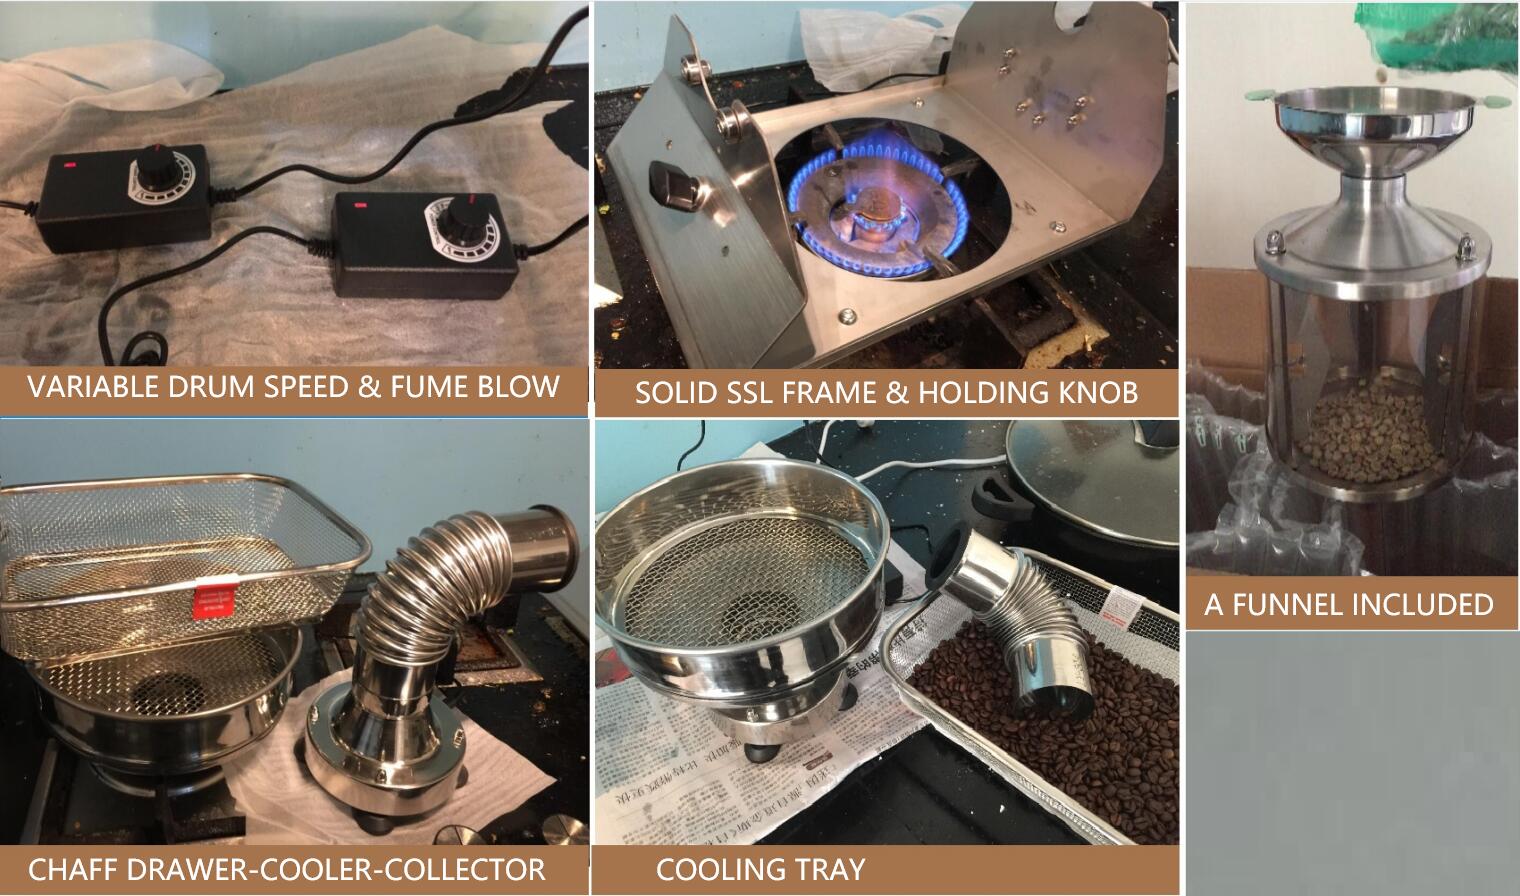 Stove-top Coffee Roaster, Roasting Machine, See-thru DRUM* - Roaster Only